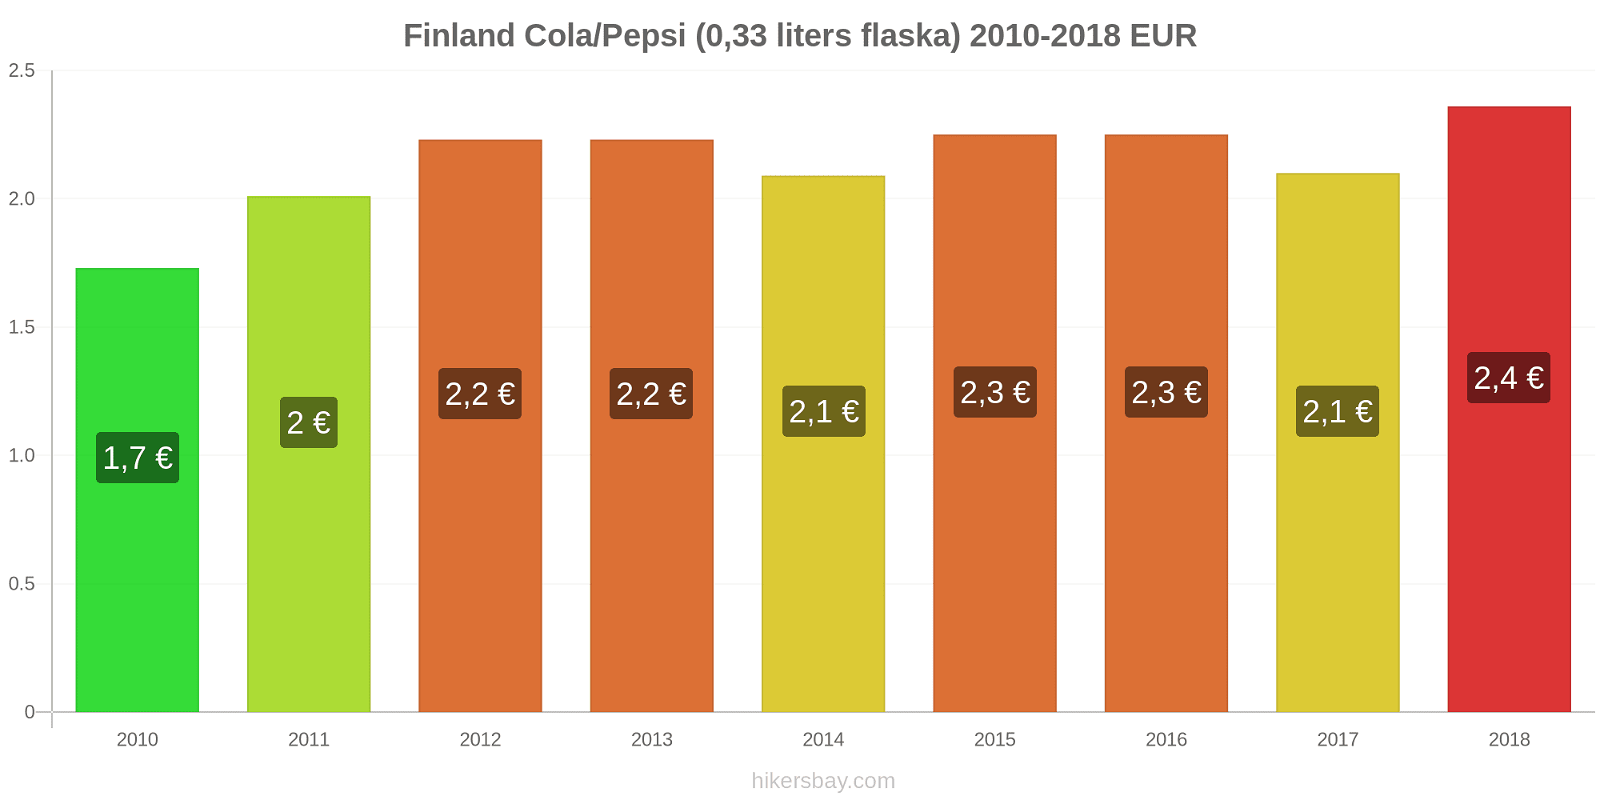 Finland prisändringar Coca-Cola/Pepsi (0.33 liters flaska) hikersbay.com